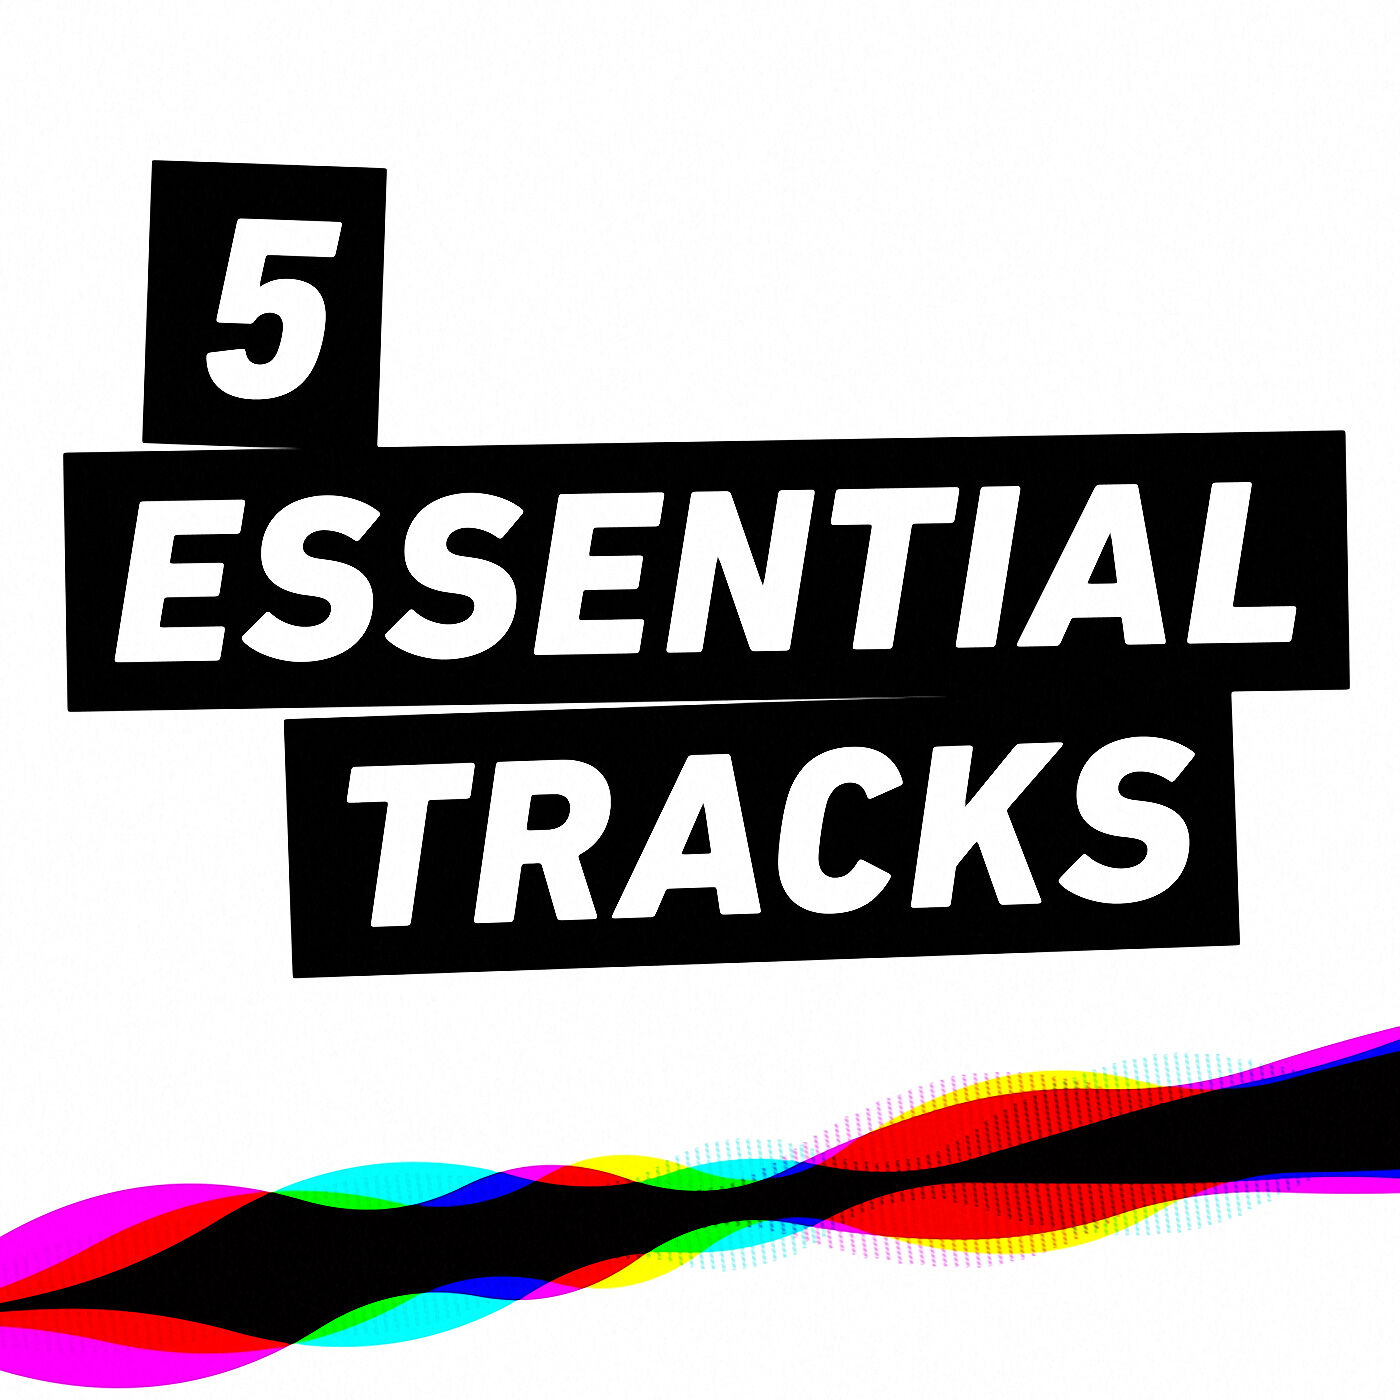 5 Essential Tracks